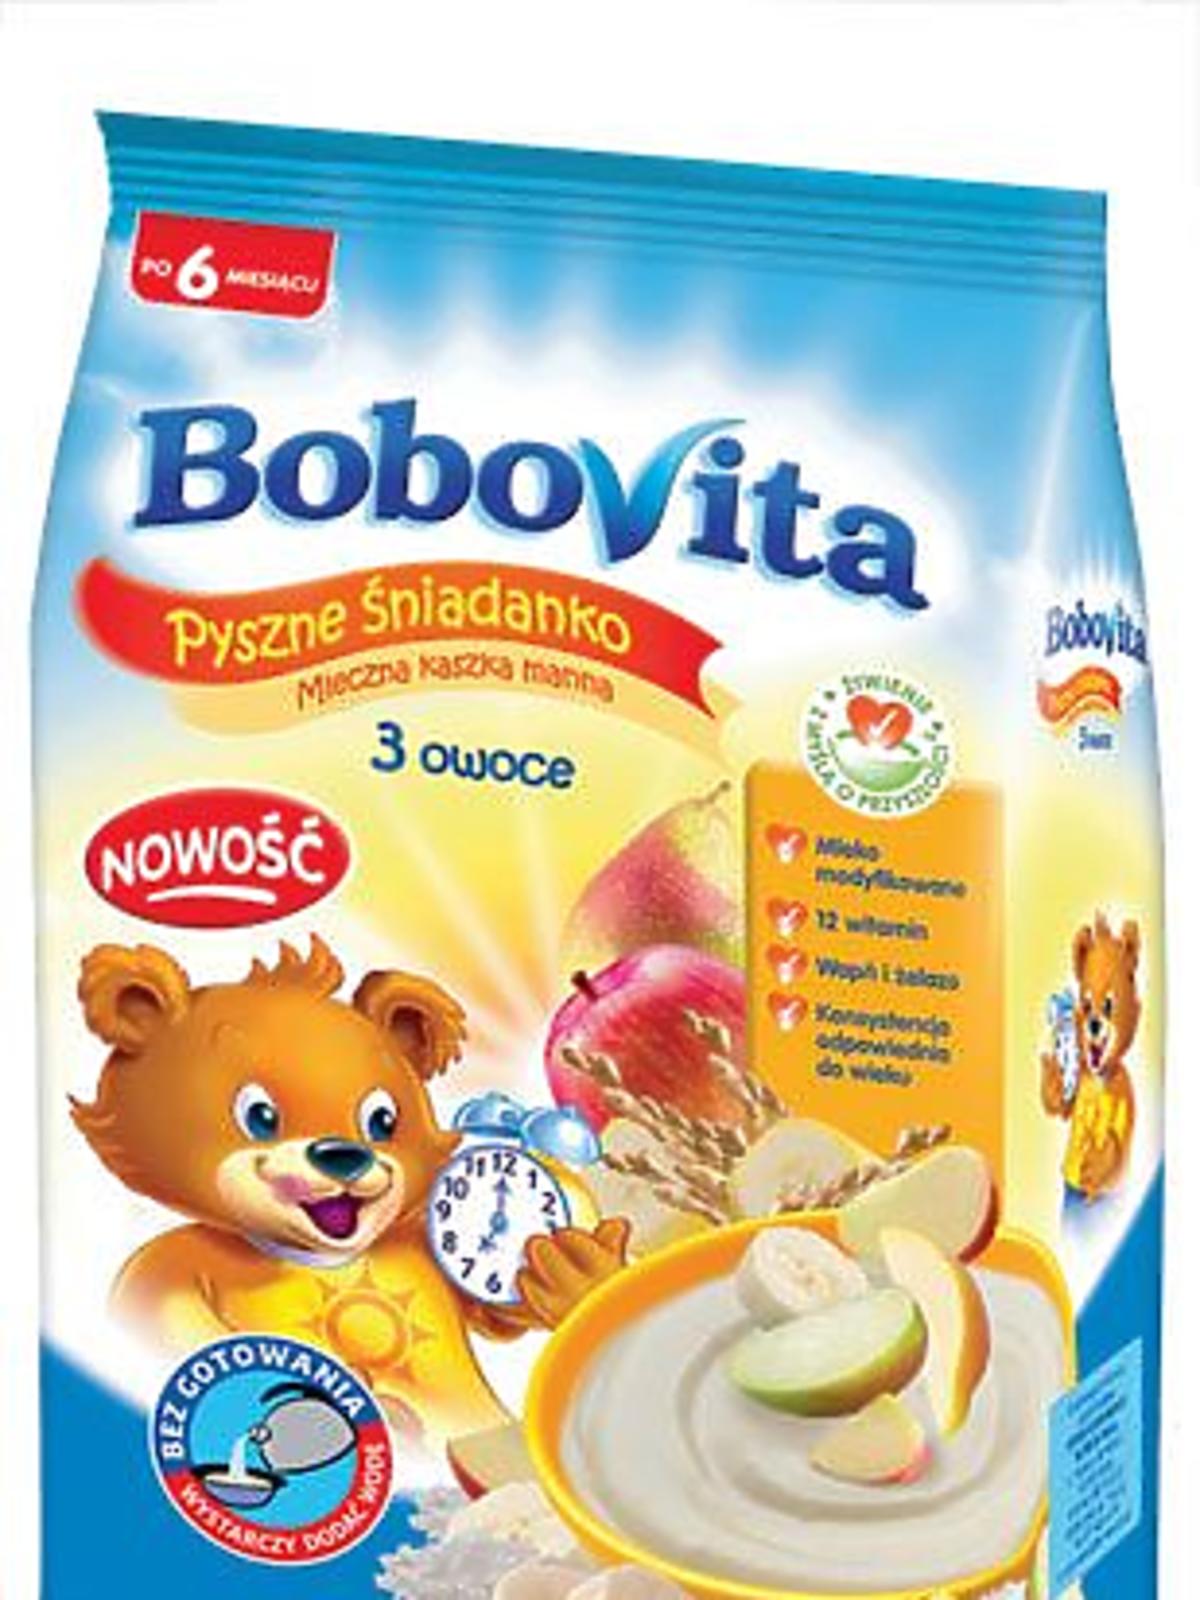 BoboVita-Pyszne-Sniadanko-k.jpg